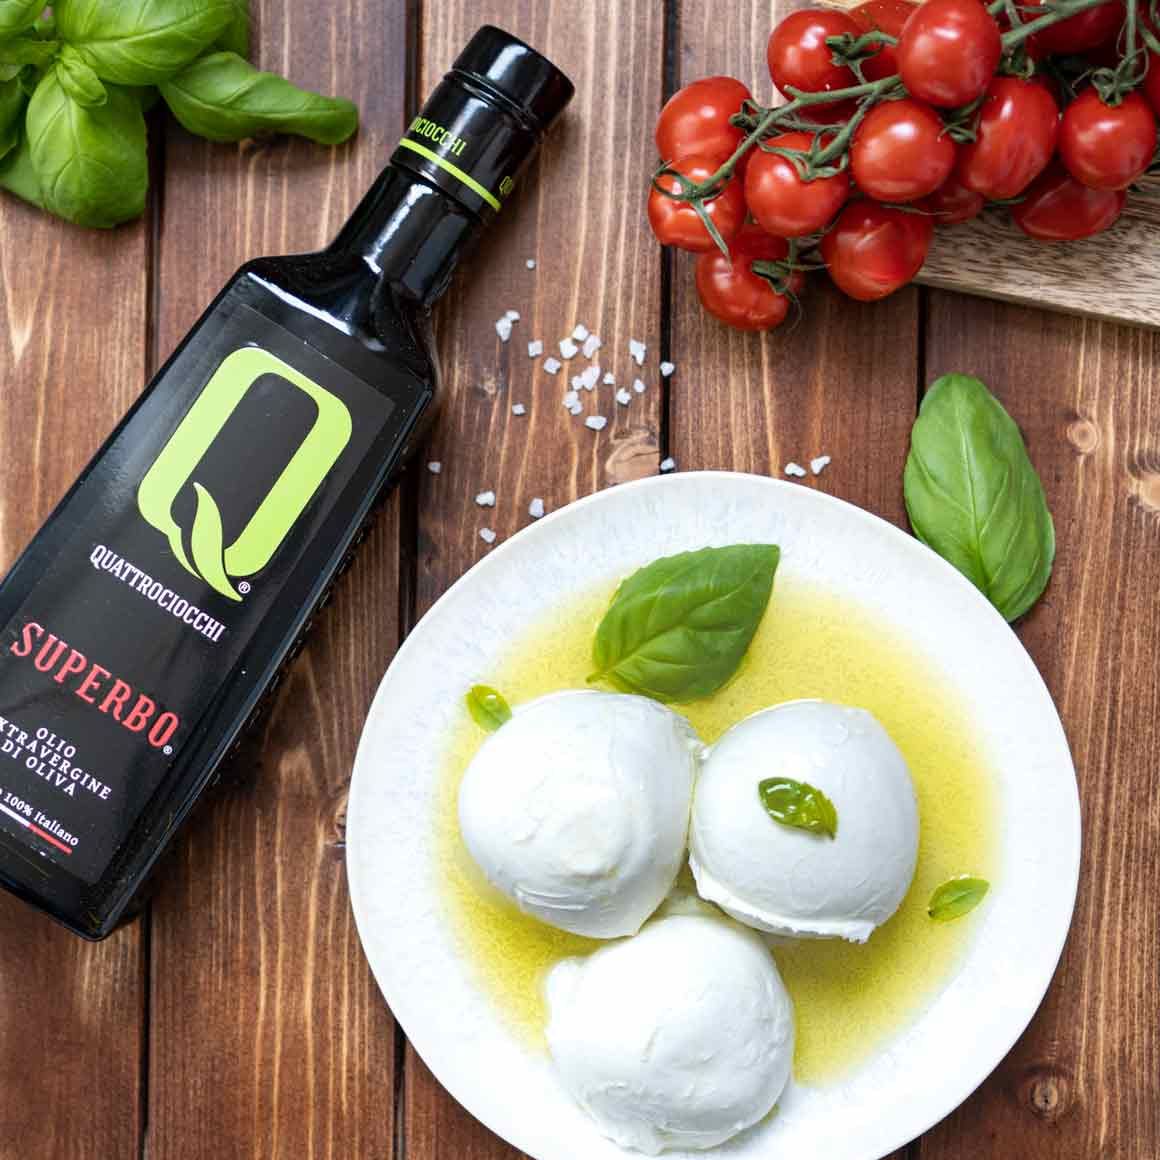 Quattrociocchi Superbo natives Olivenöl extra mit Mozzarella